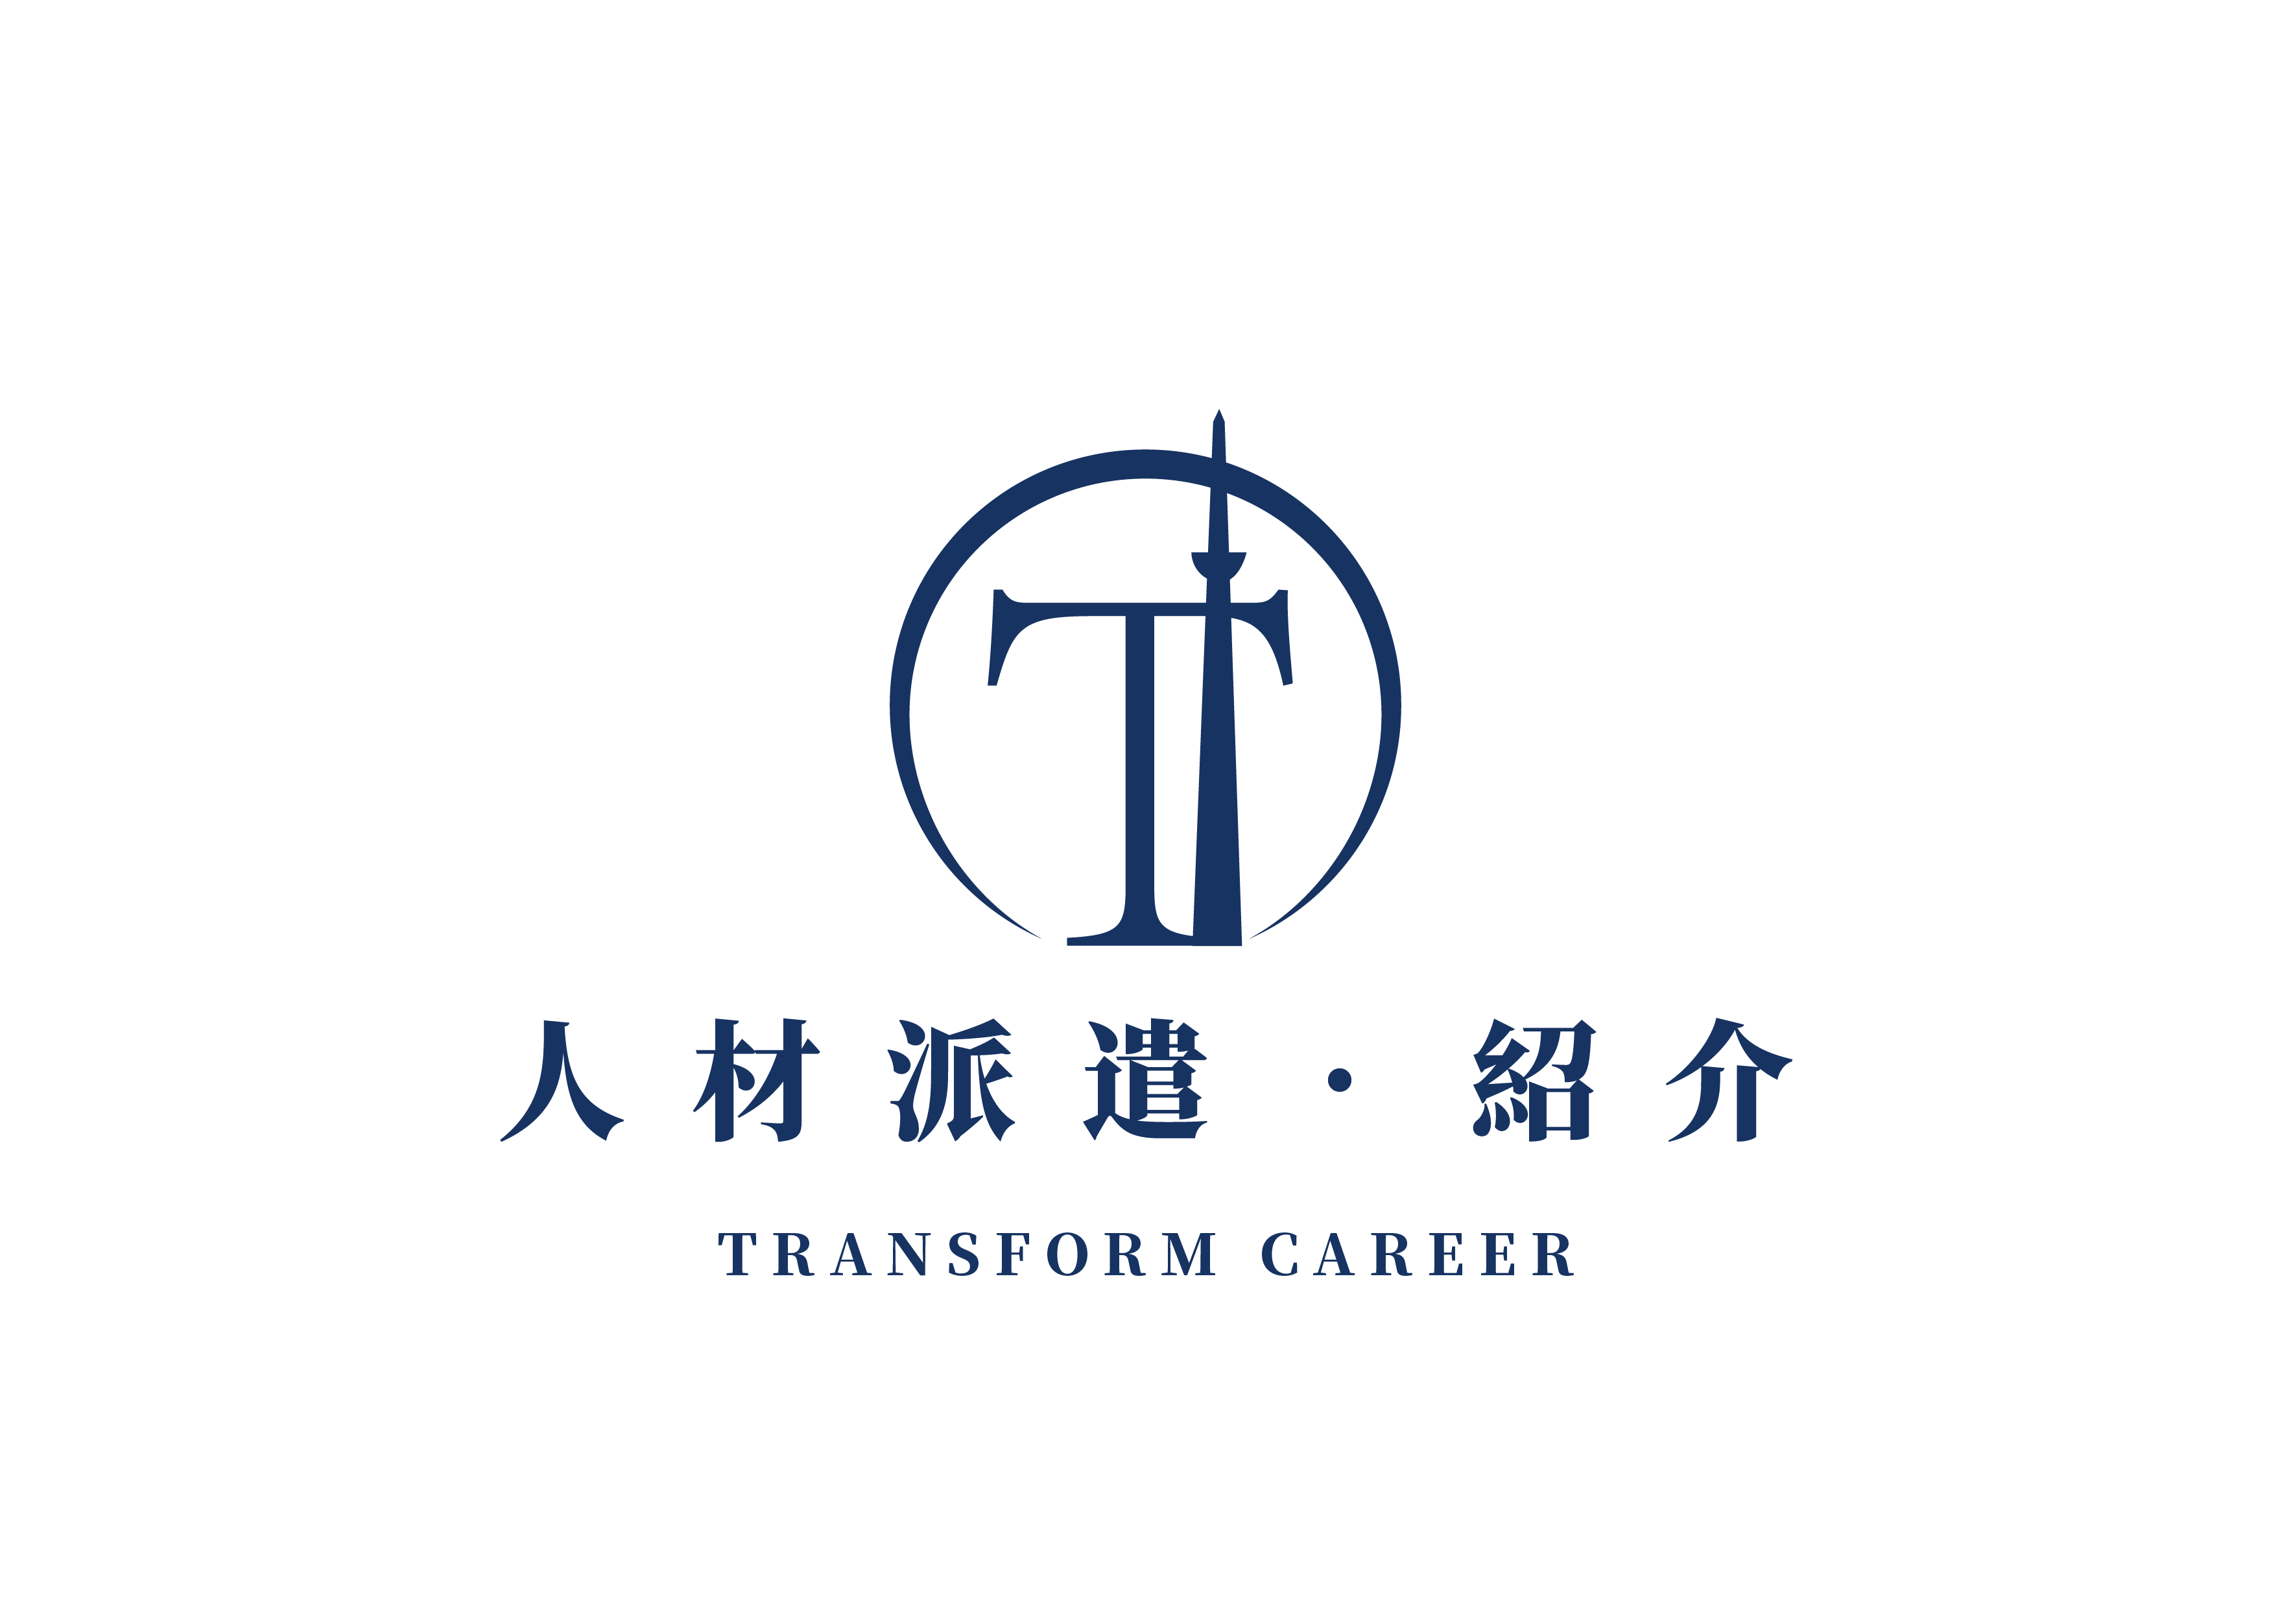 TRANSFORM CAREER